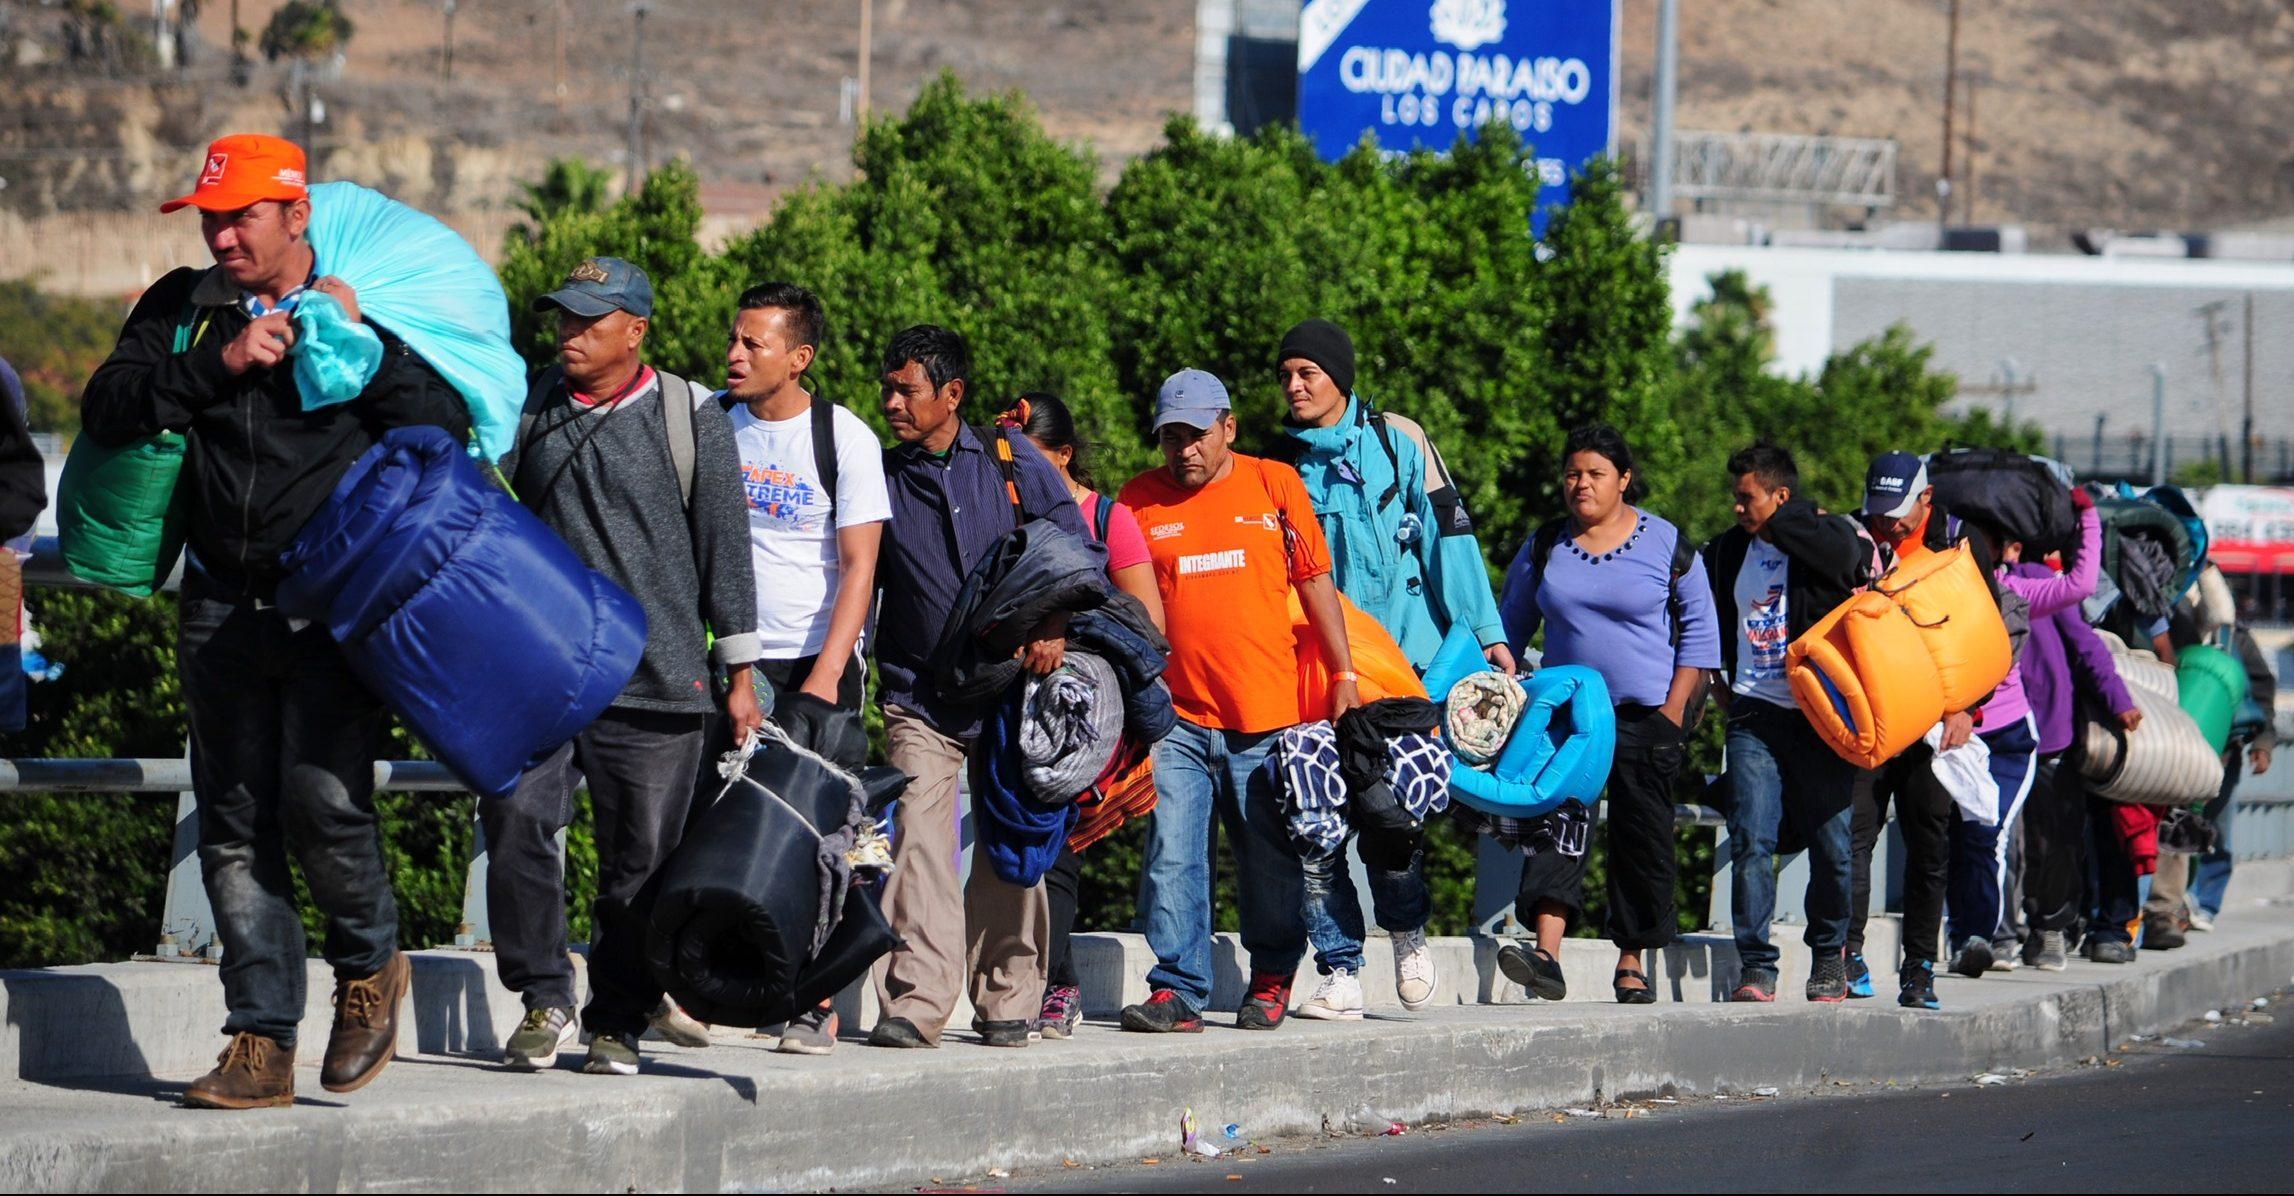 Moriremos esperando: migrantes inician largo trámite de solicitar asilo en EU desde México